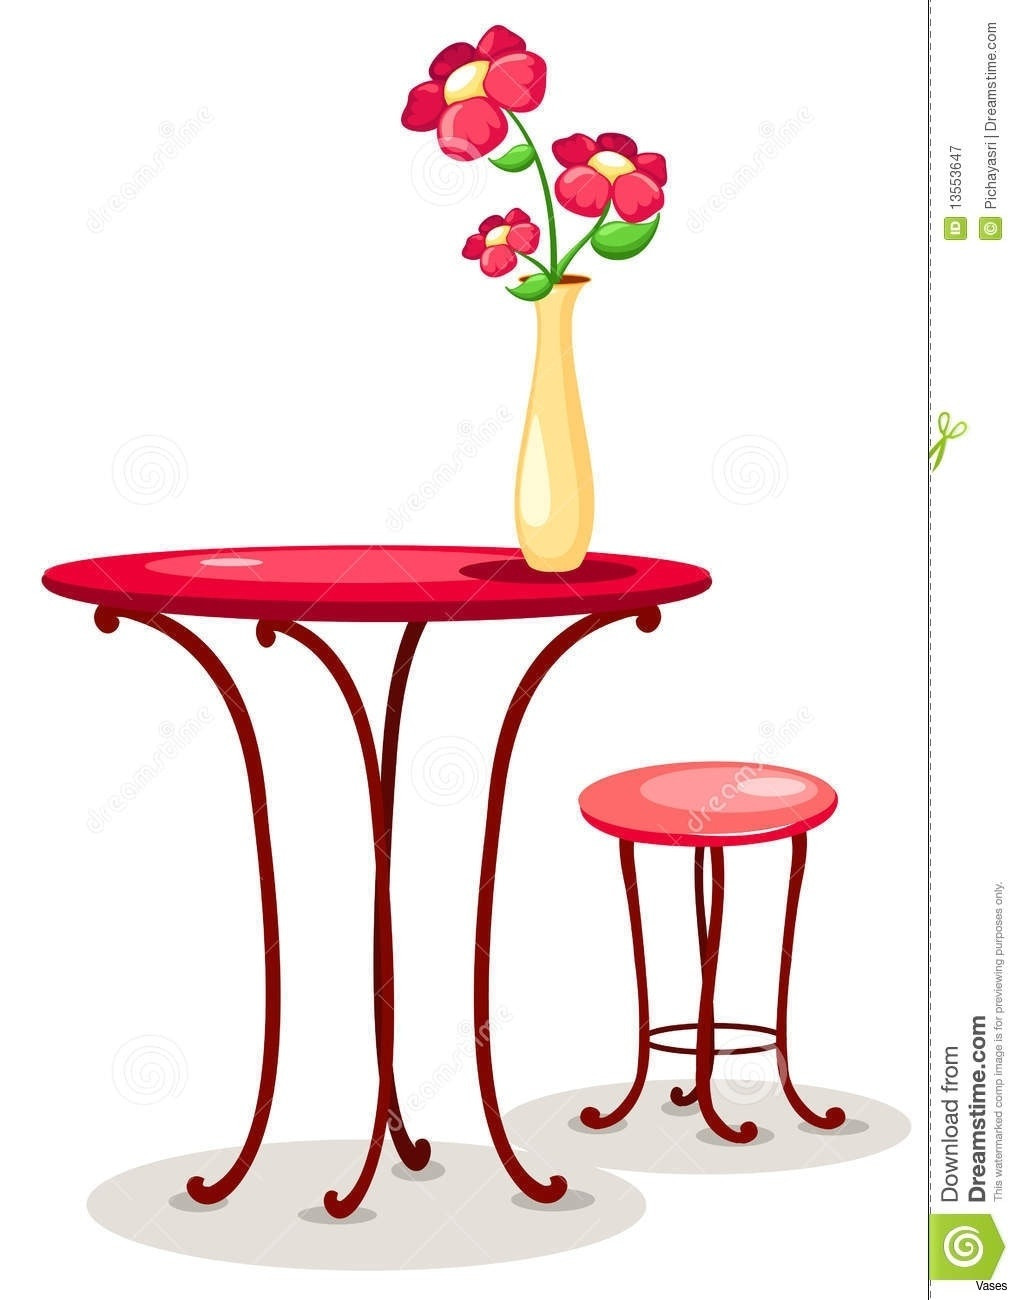 11 Popular Red Rose Vase 2024 free download red rose vase of flower picture wallpaper modern gerbera flower vase table 3072x2304h regarding download image